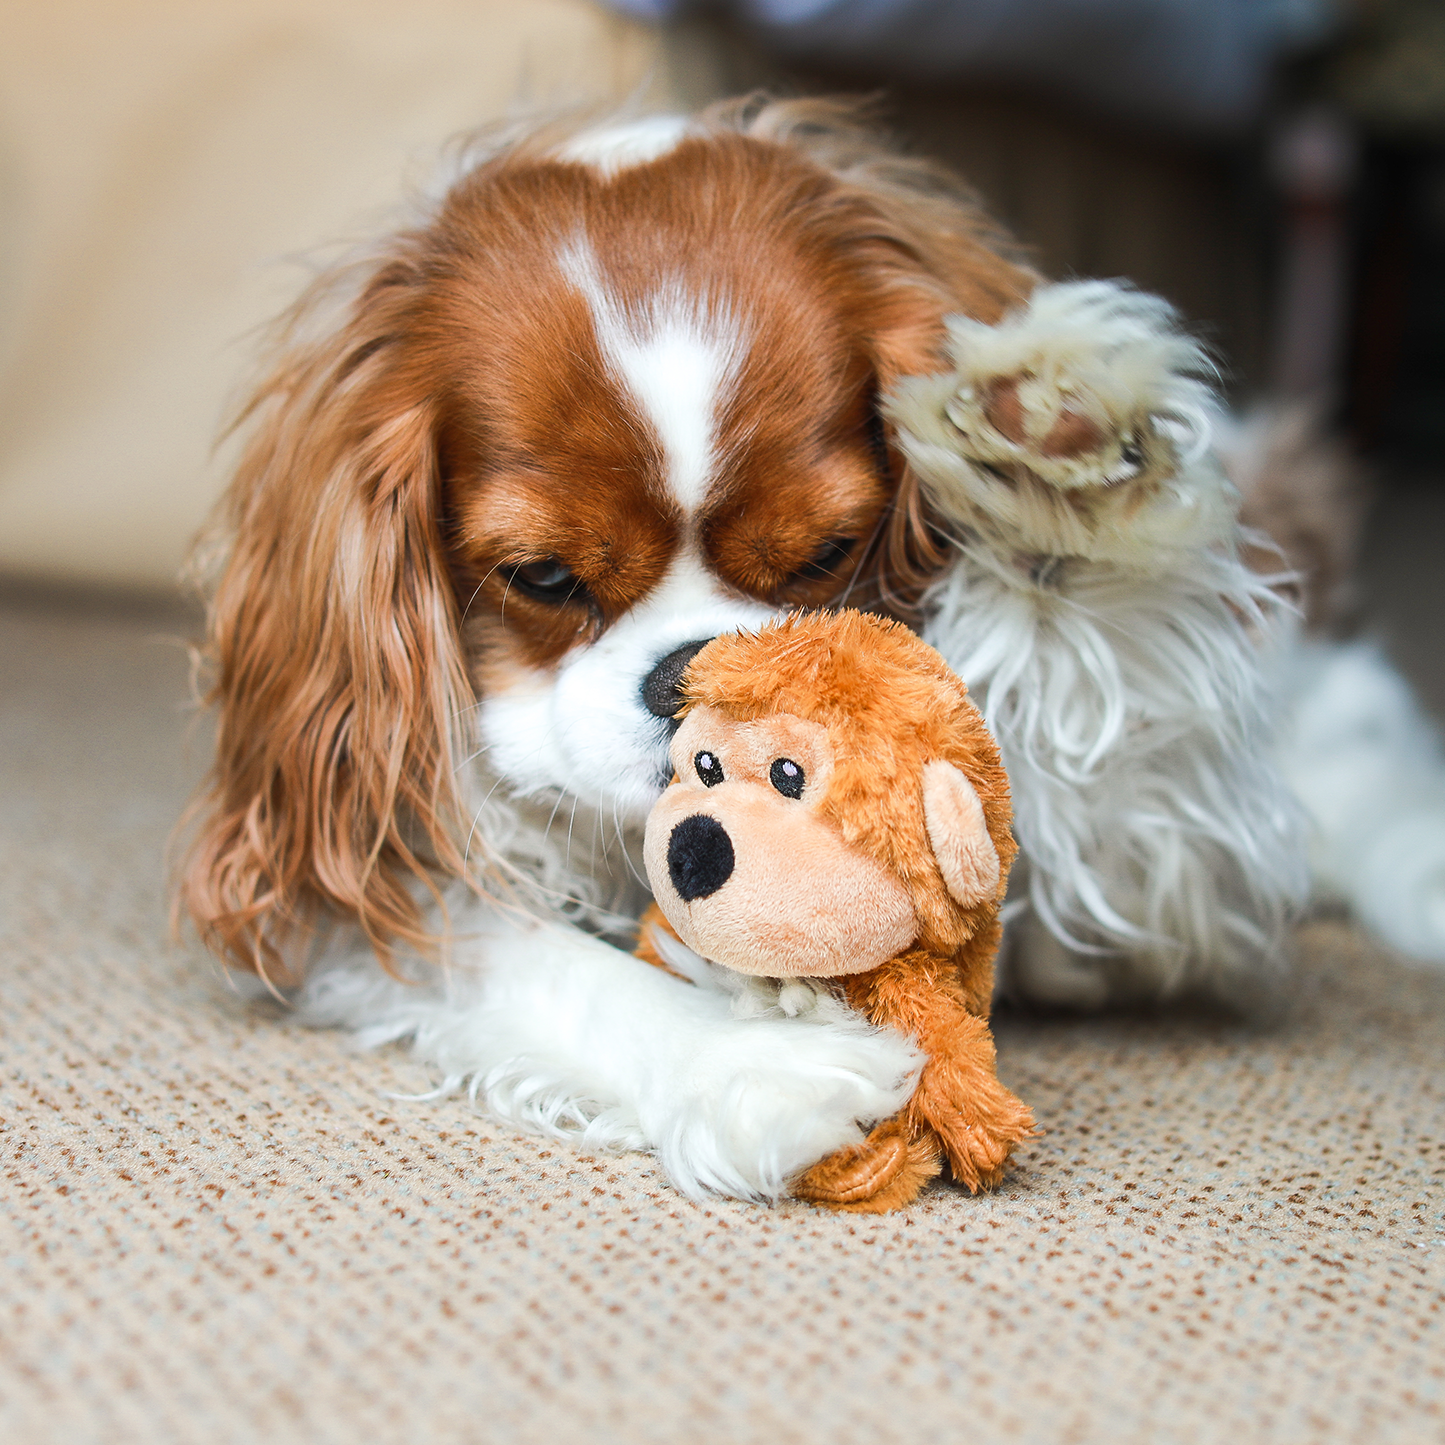 Plush toy for puppy dog, monkey style